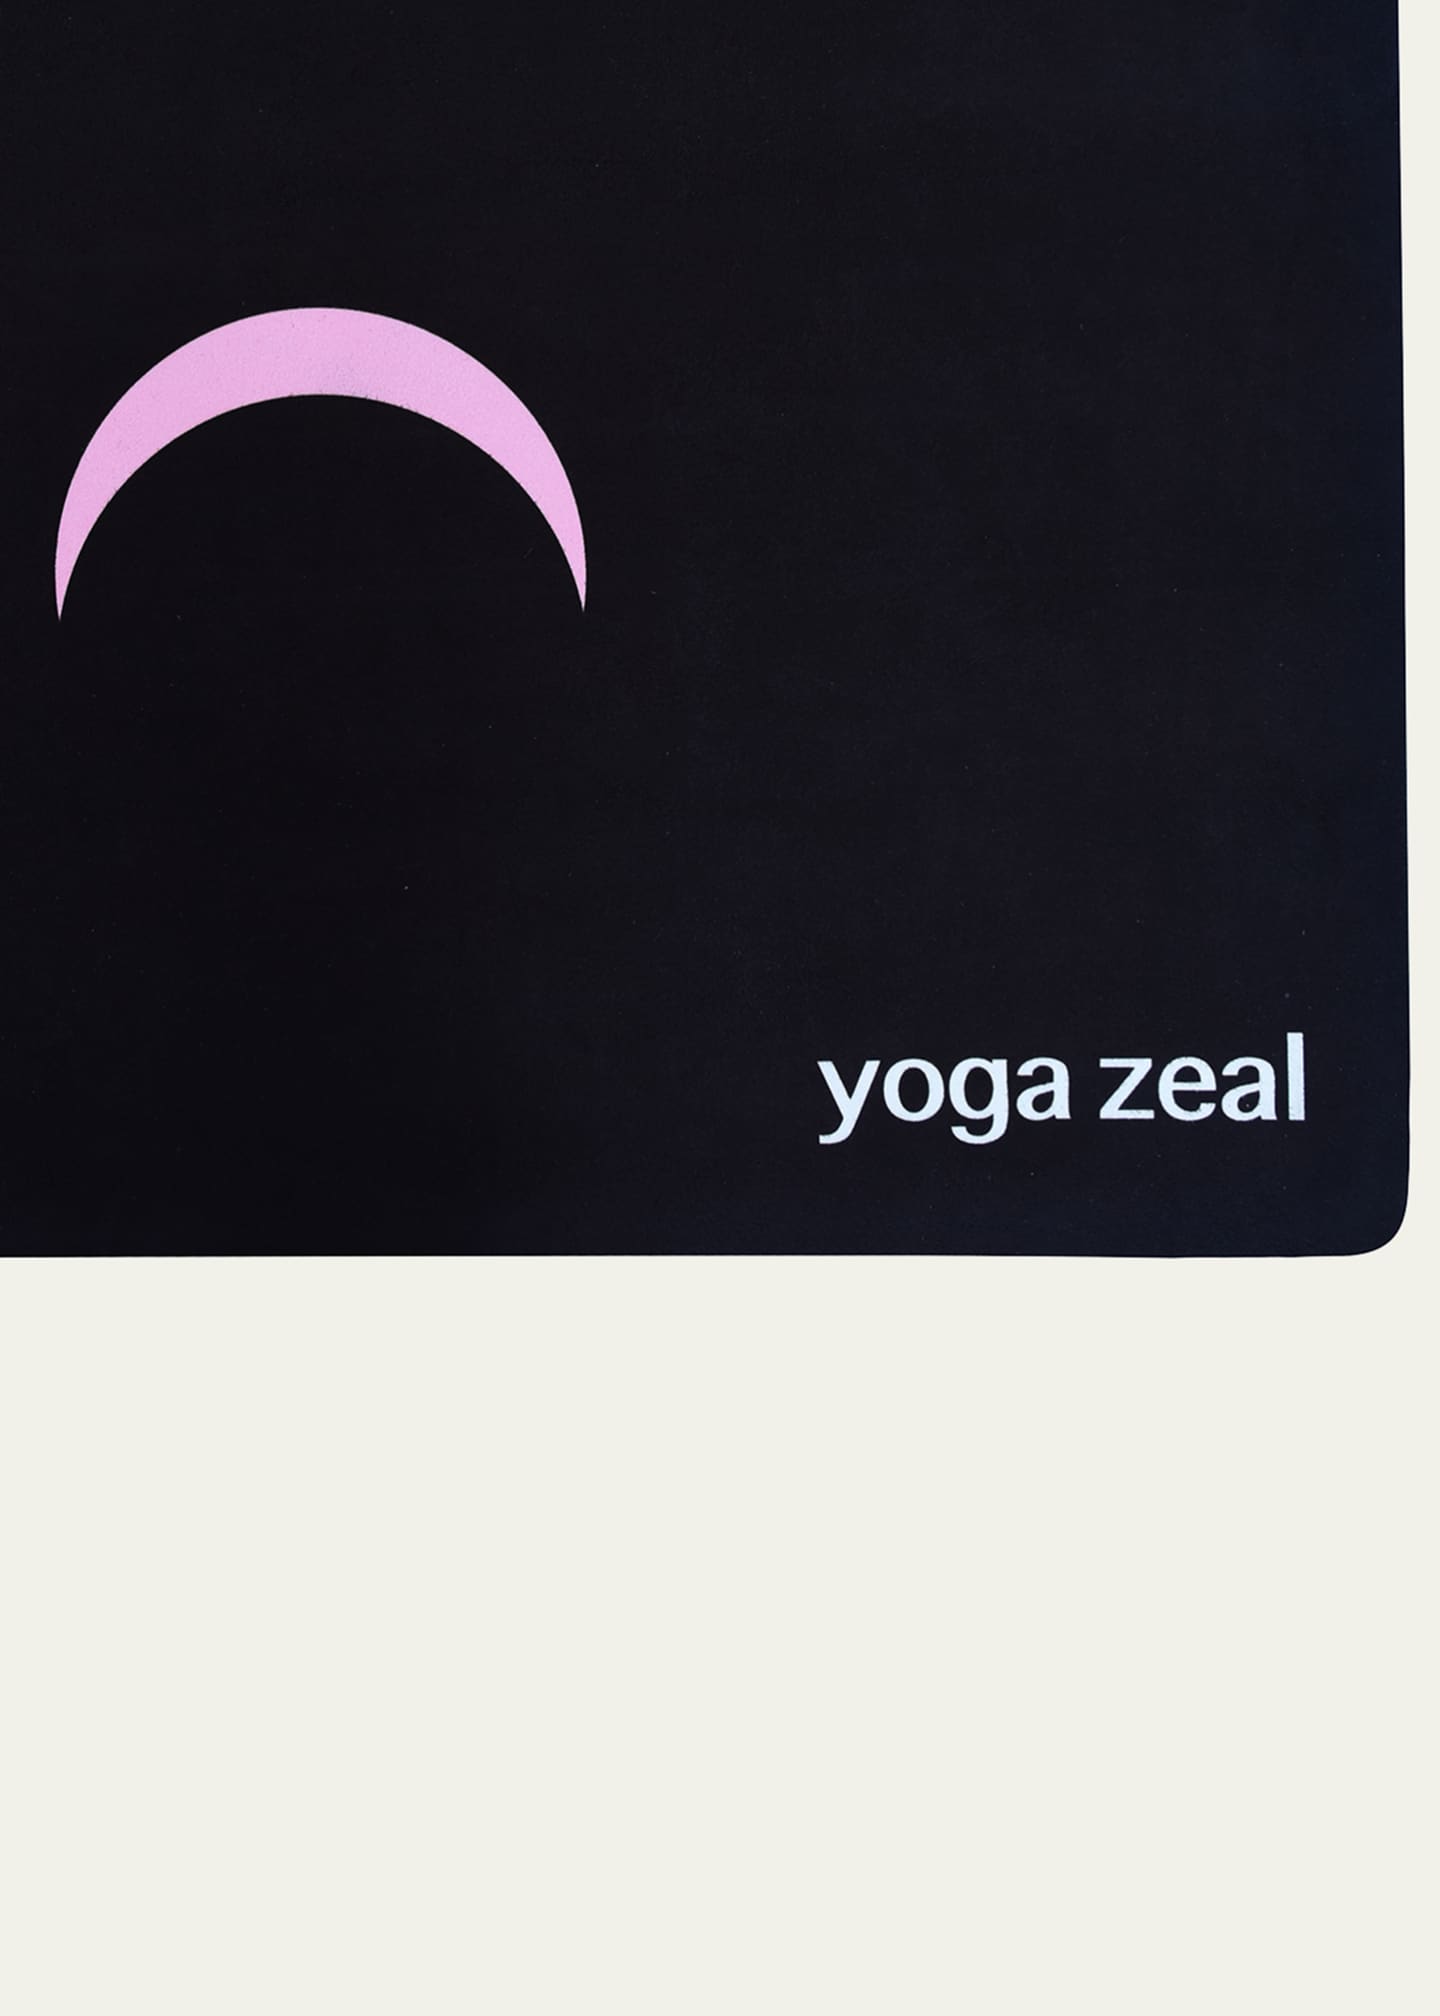 Yoga Zeal Moon Phases Printed Yoga Mat Image 3 of 3